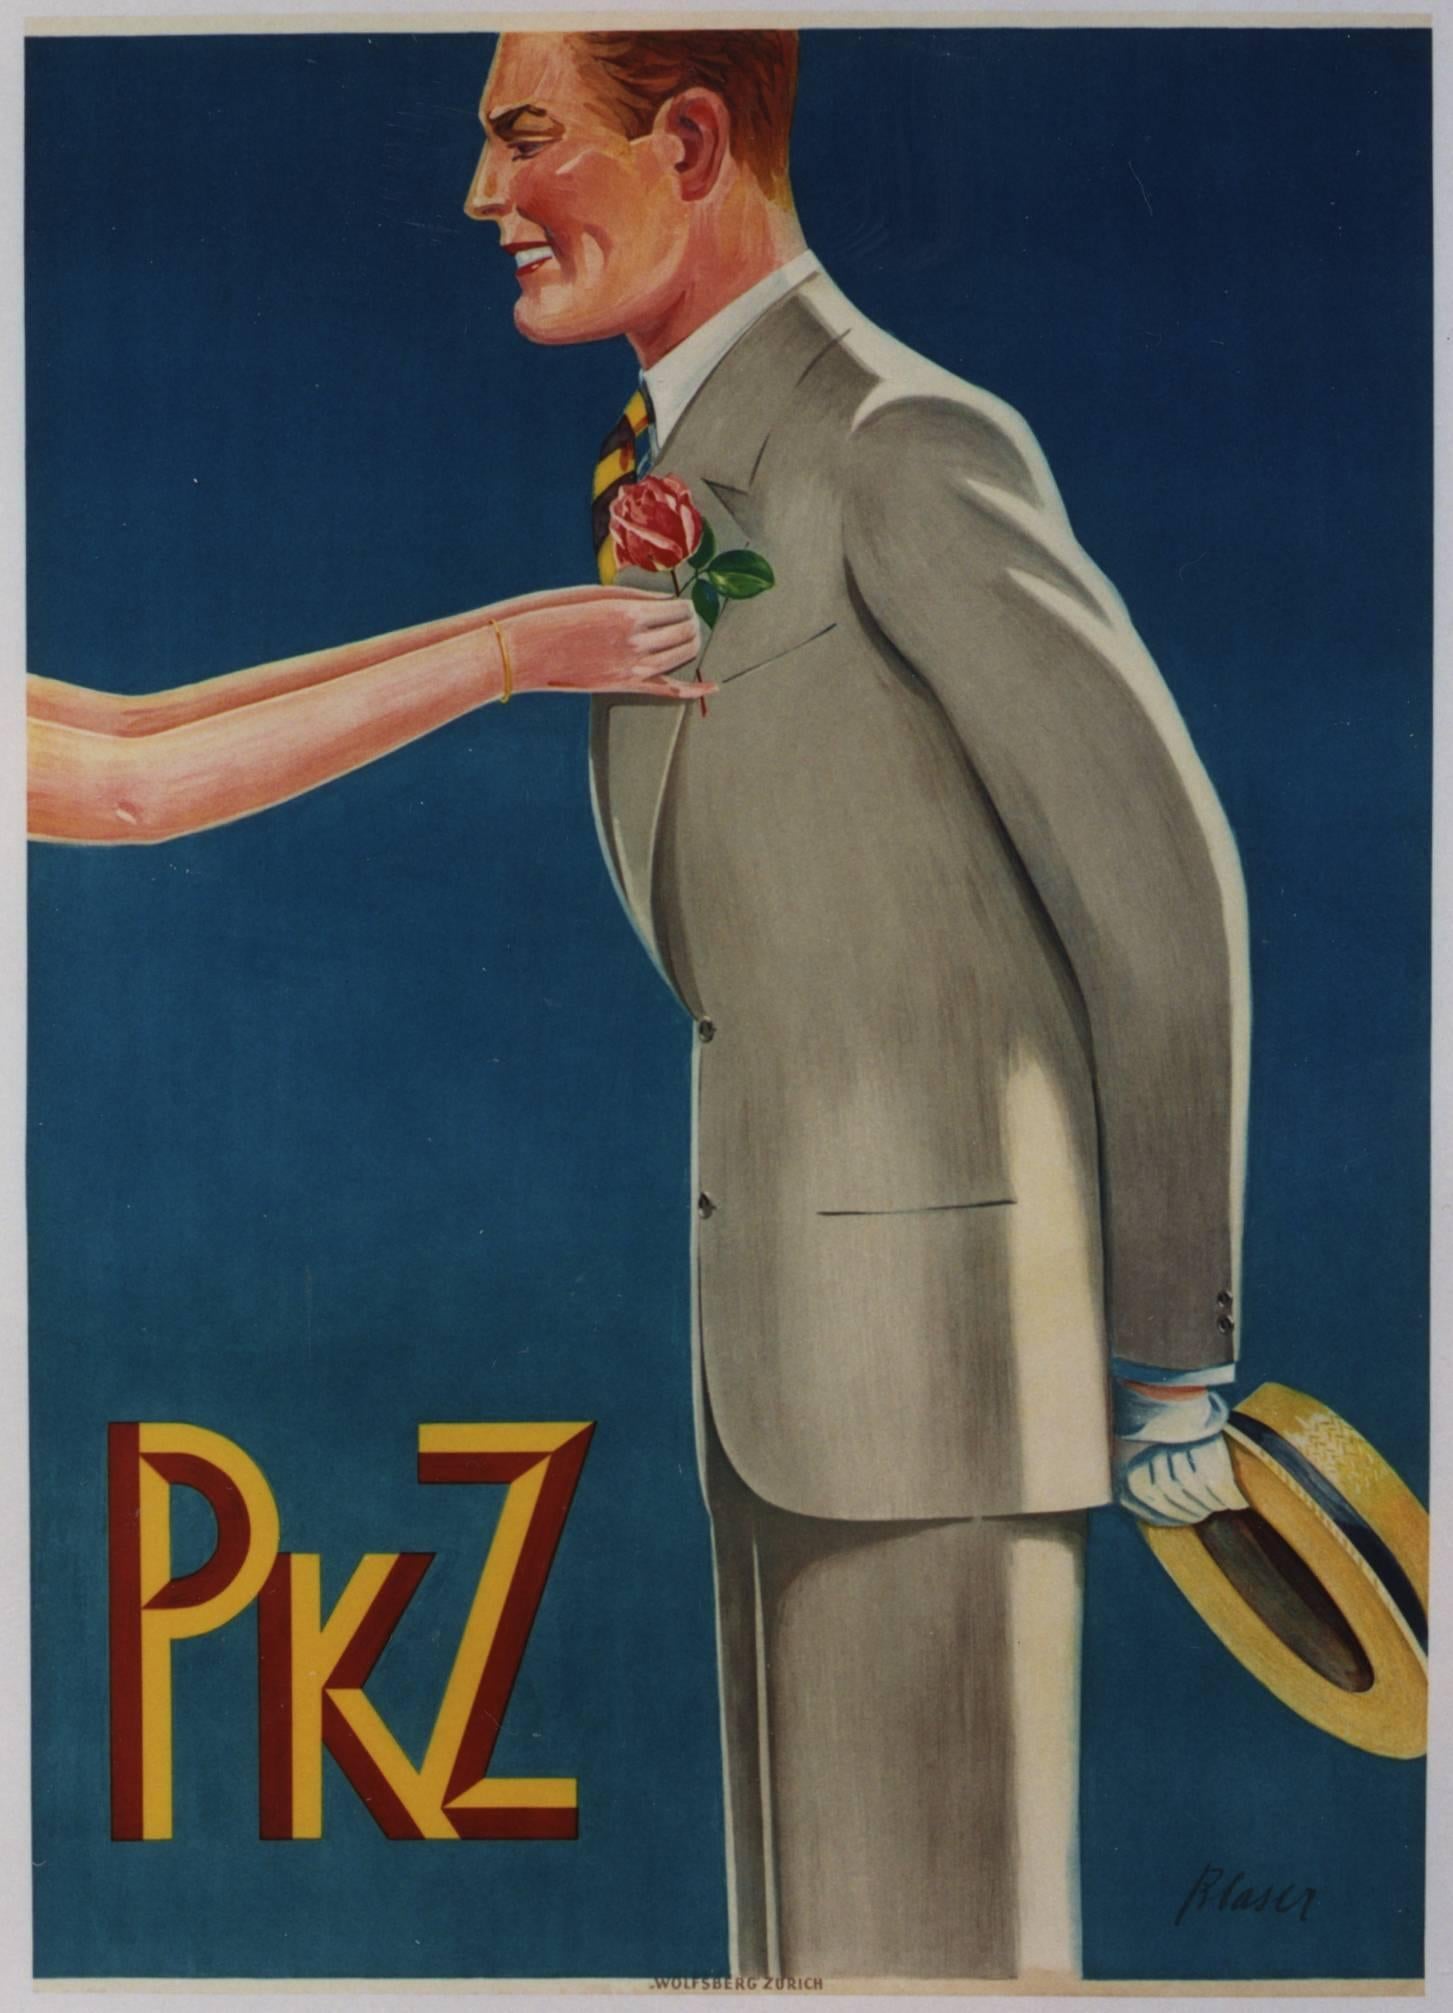 Blazer, Hermann Figurative Print - PKZ [Hand putting Rose into lapel of Suit].